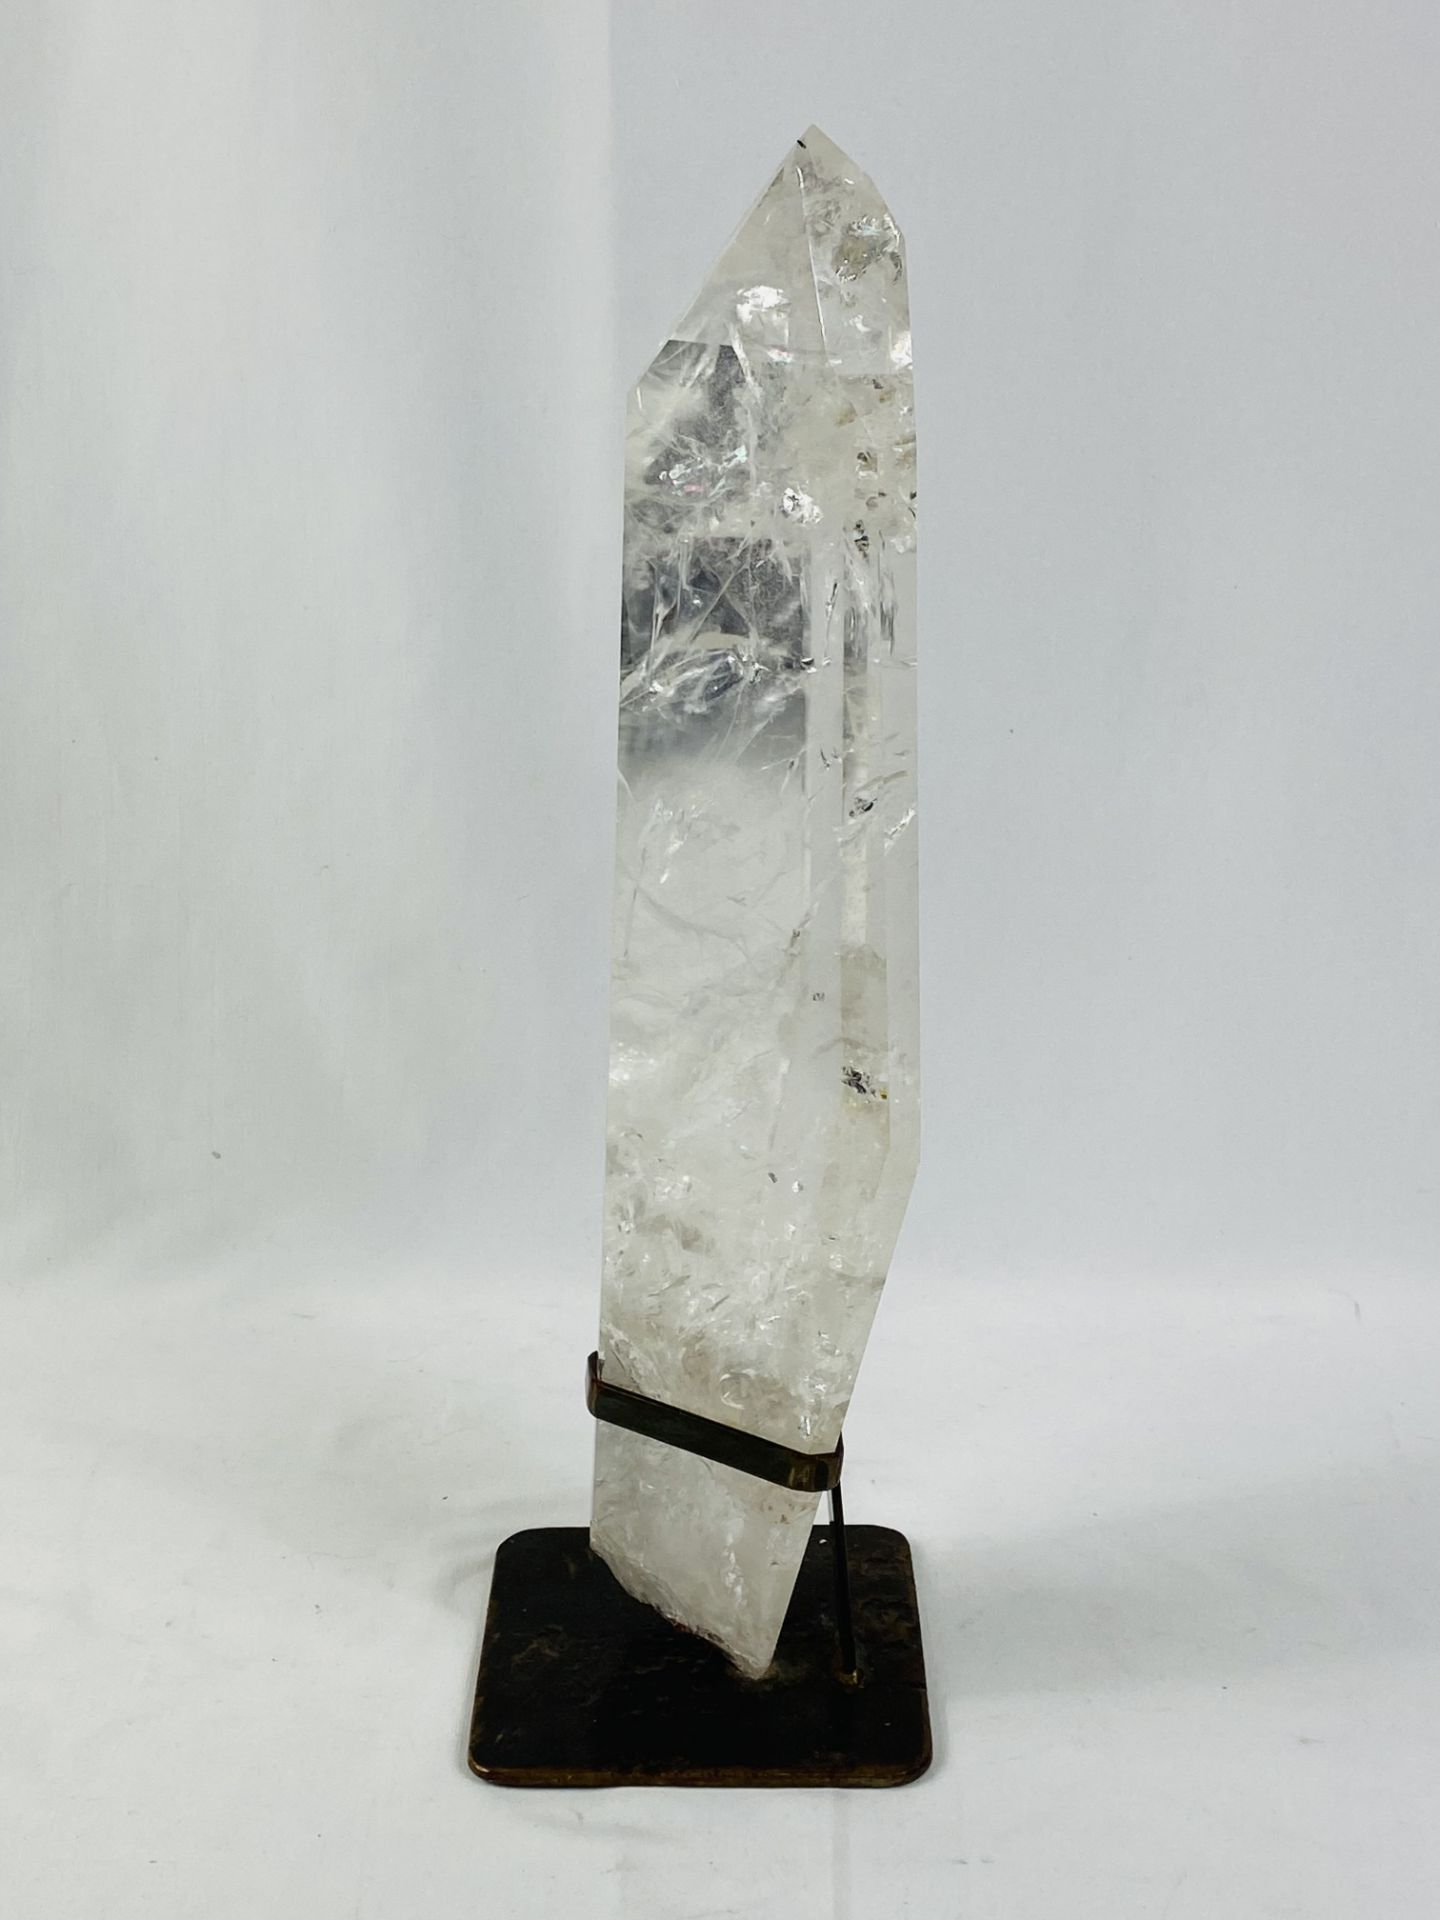 Polished rock crystal mounted in metal base - Image 2 of 6